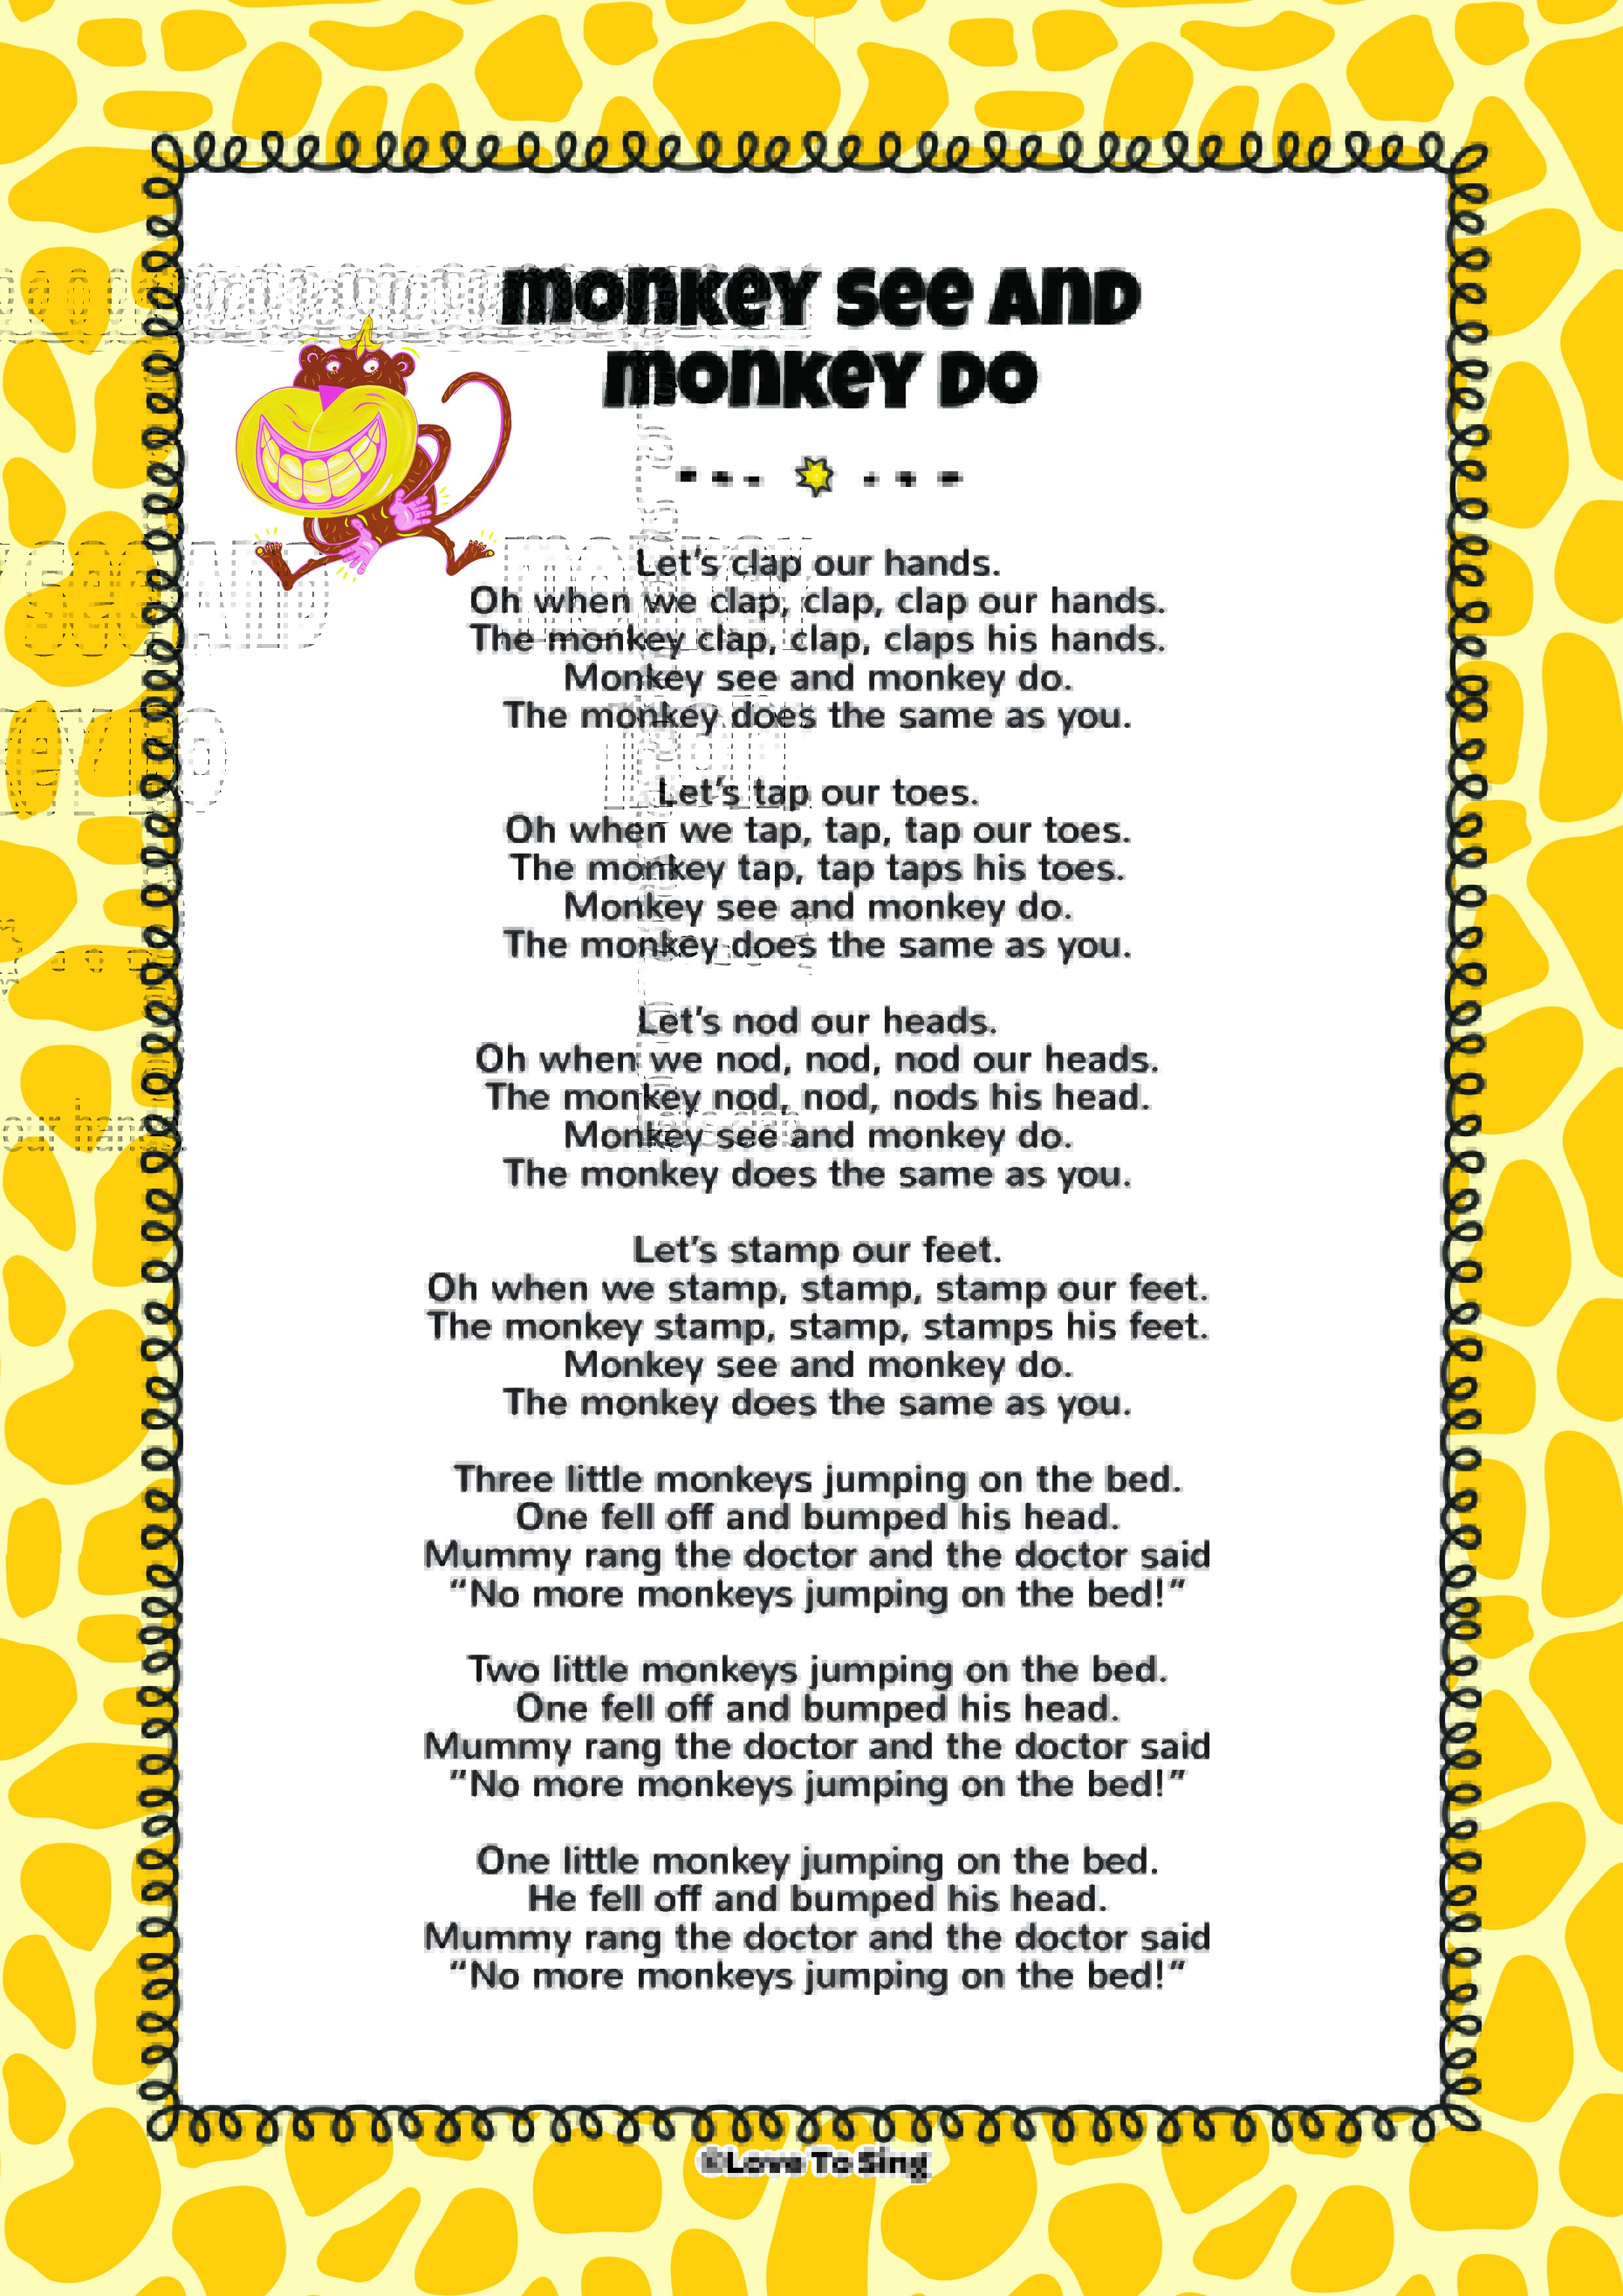 Monkey See And Monkey Do | FREE Video Song, Lyrics ...
